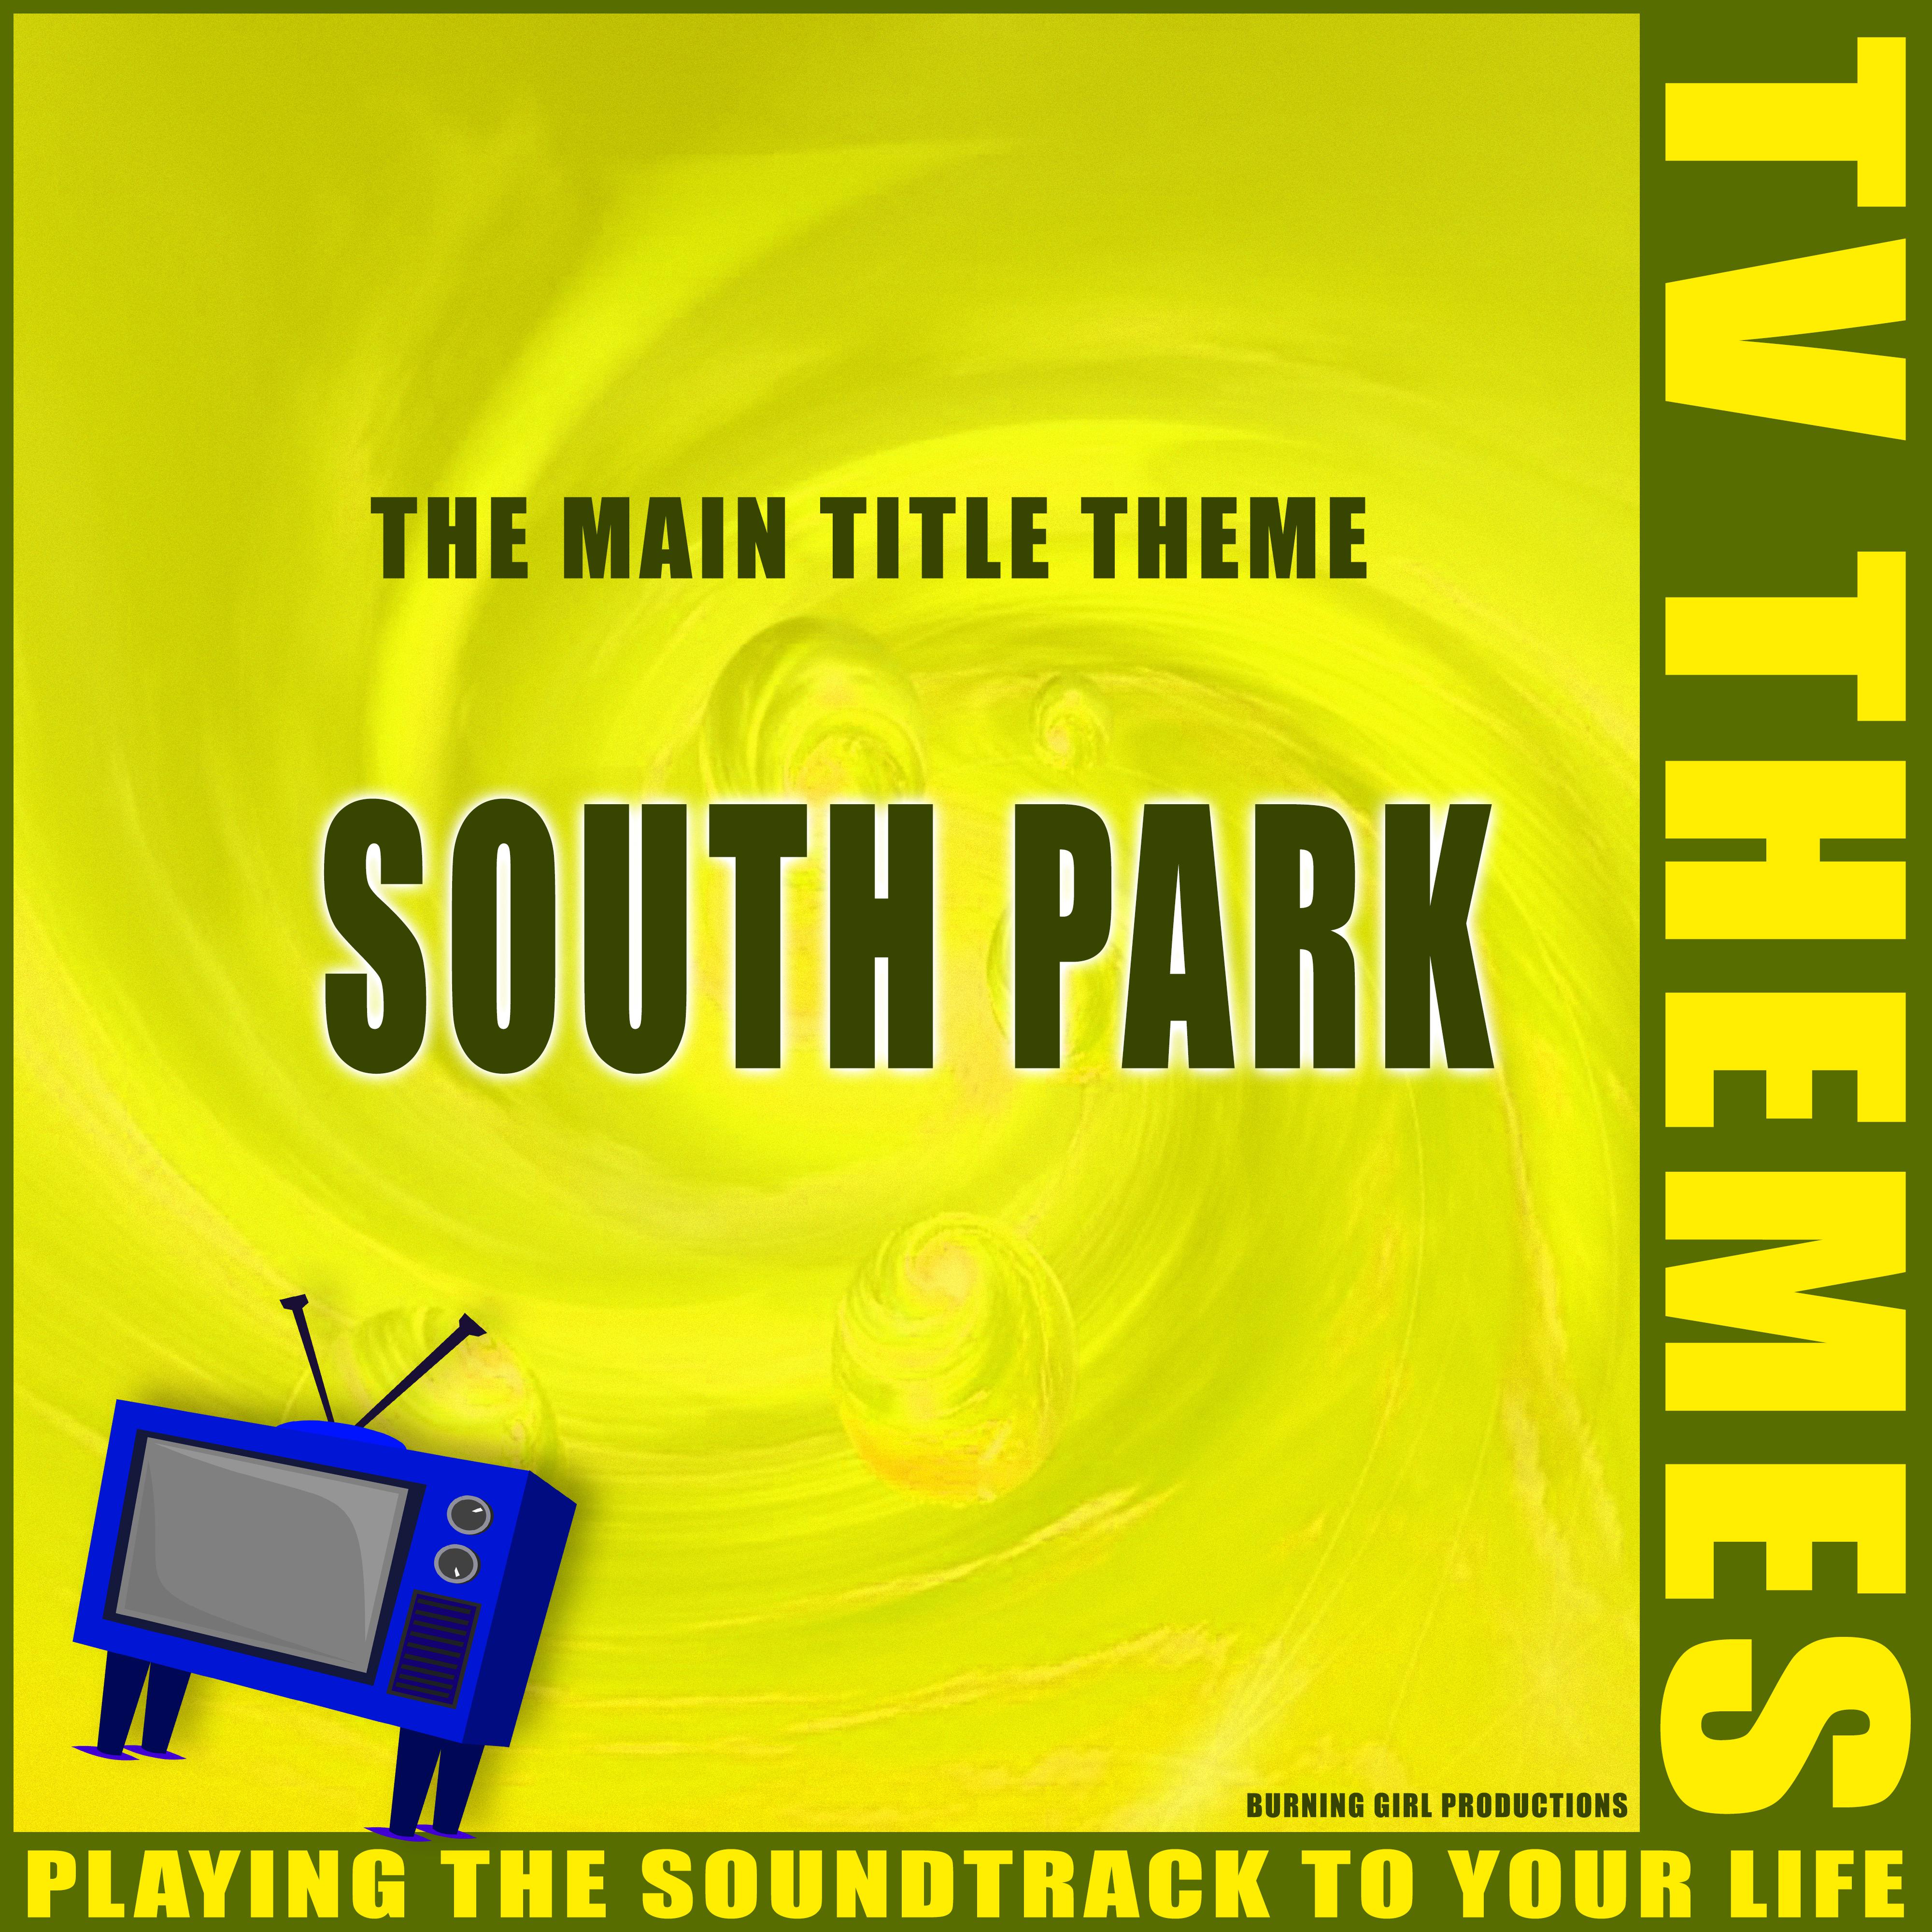 South Park - The Main Title Theme